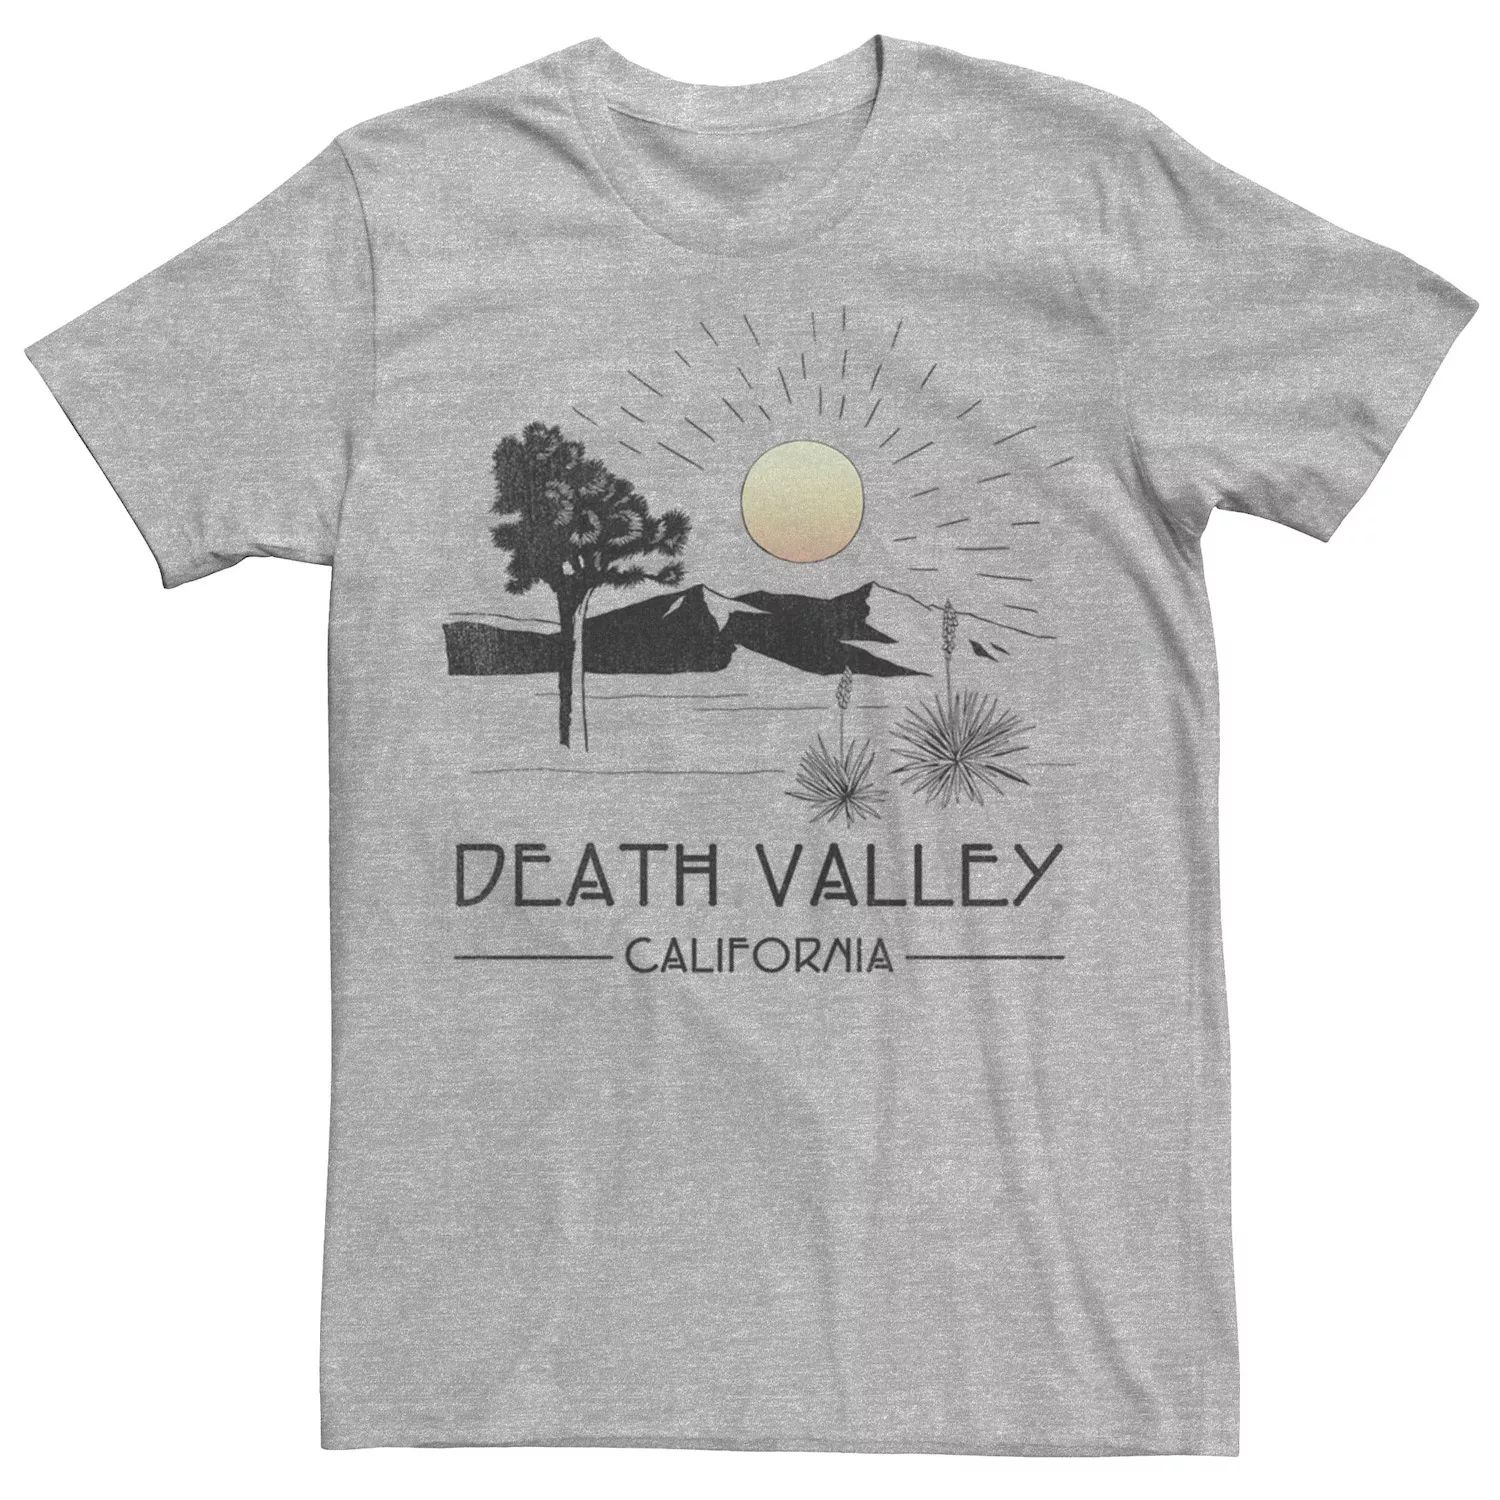 Мужская футболка с логотипом Death Valley California Licensed Character death valley national park california retro vintage cactus t shirt